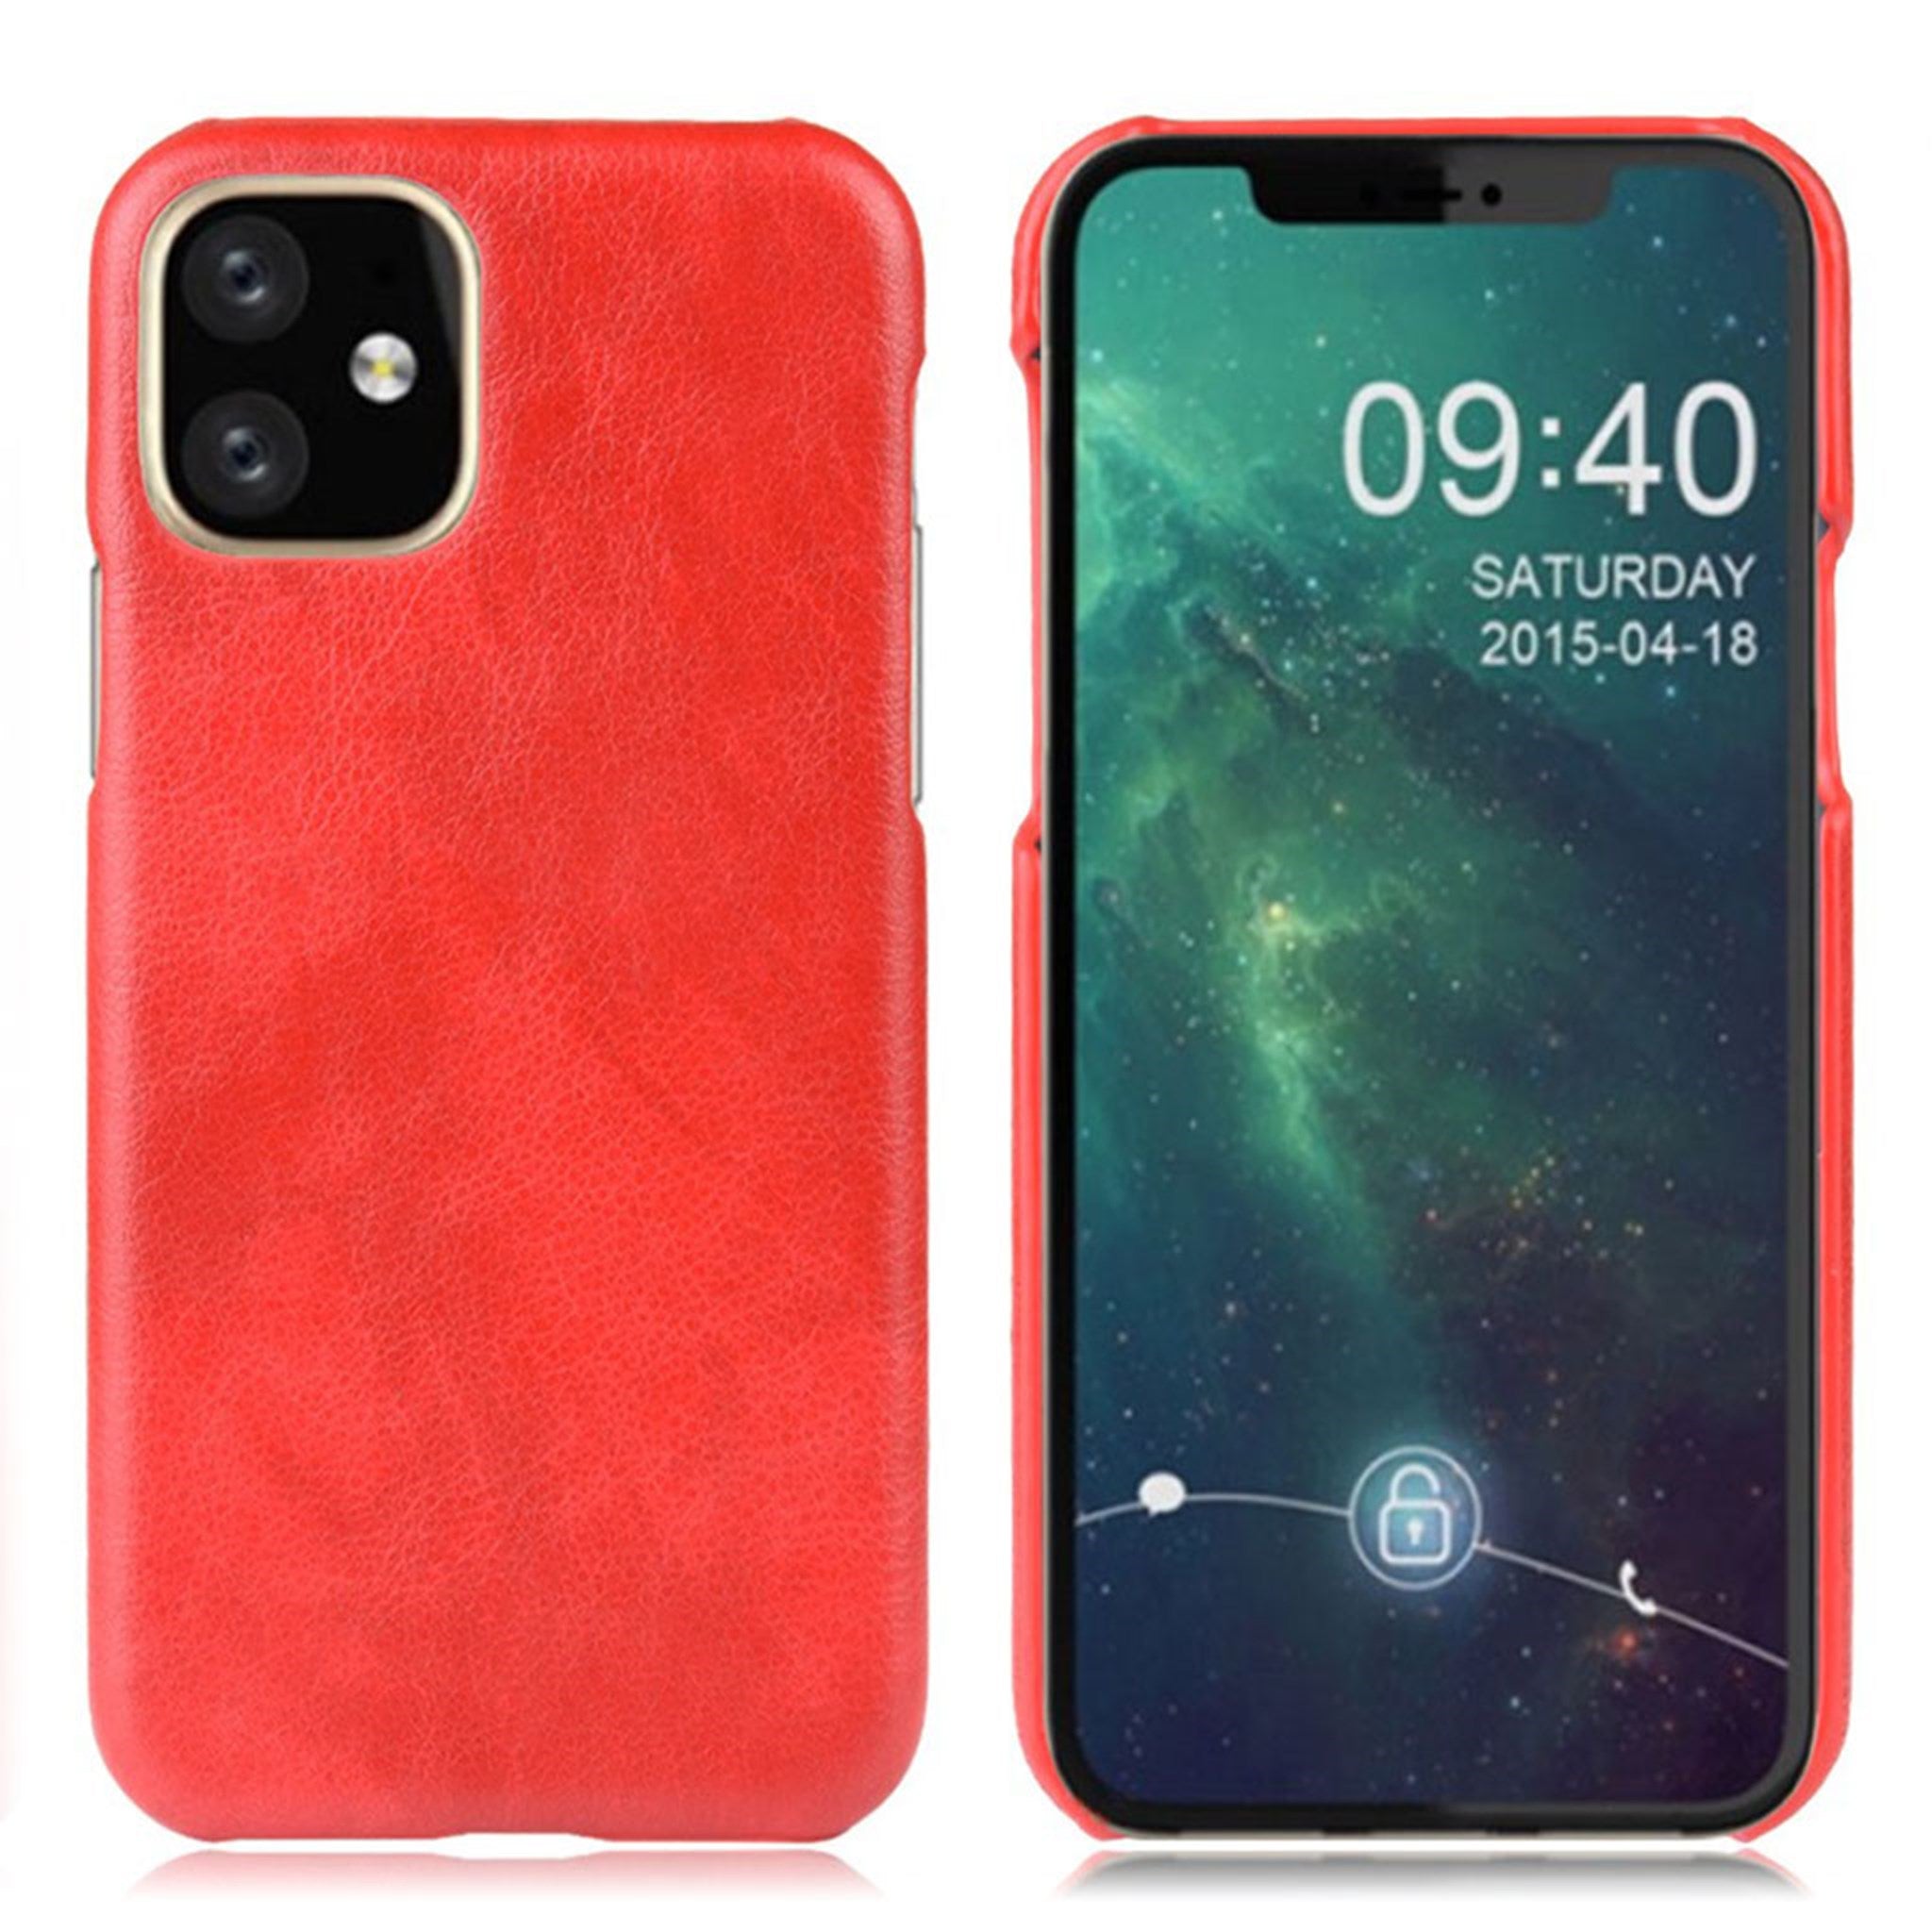 Prestige iPhone 11 Pro Max case - Red